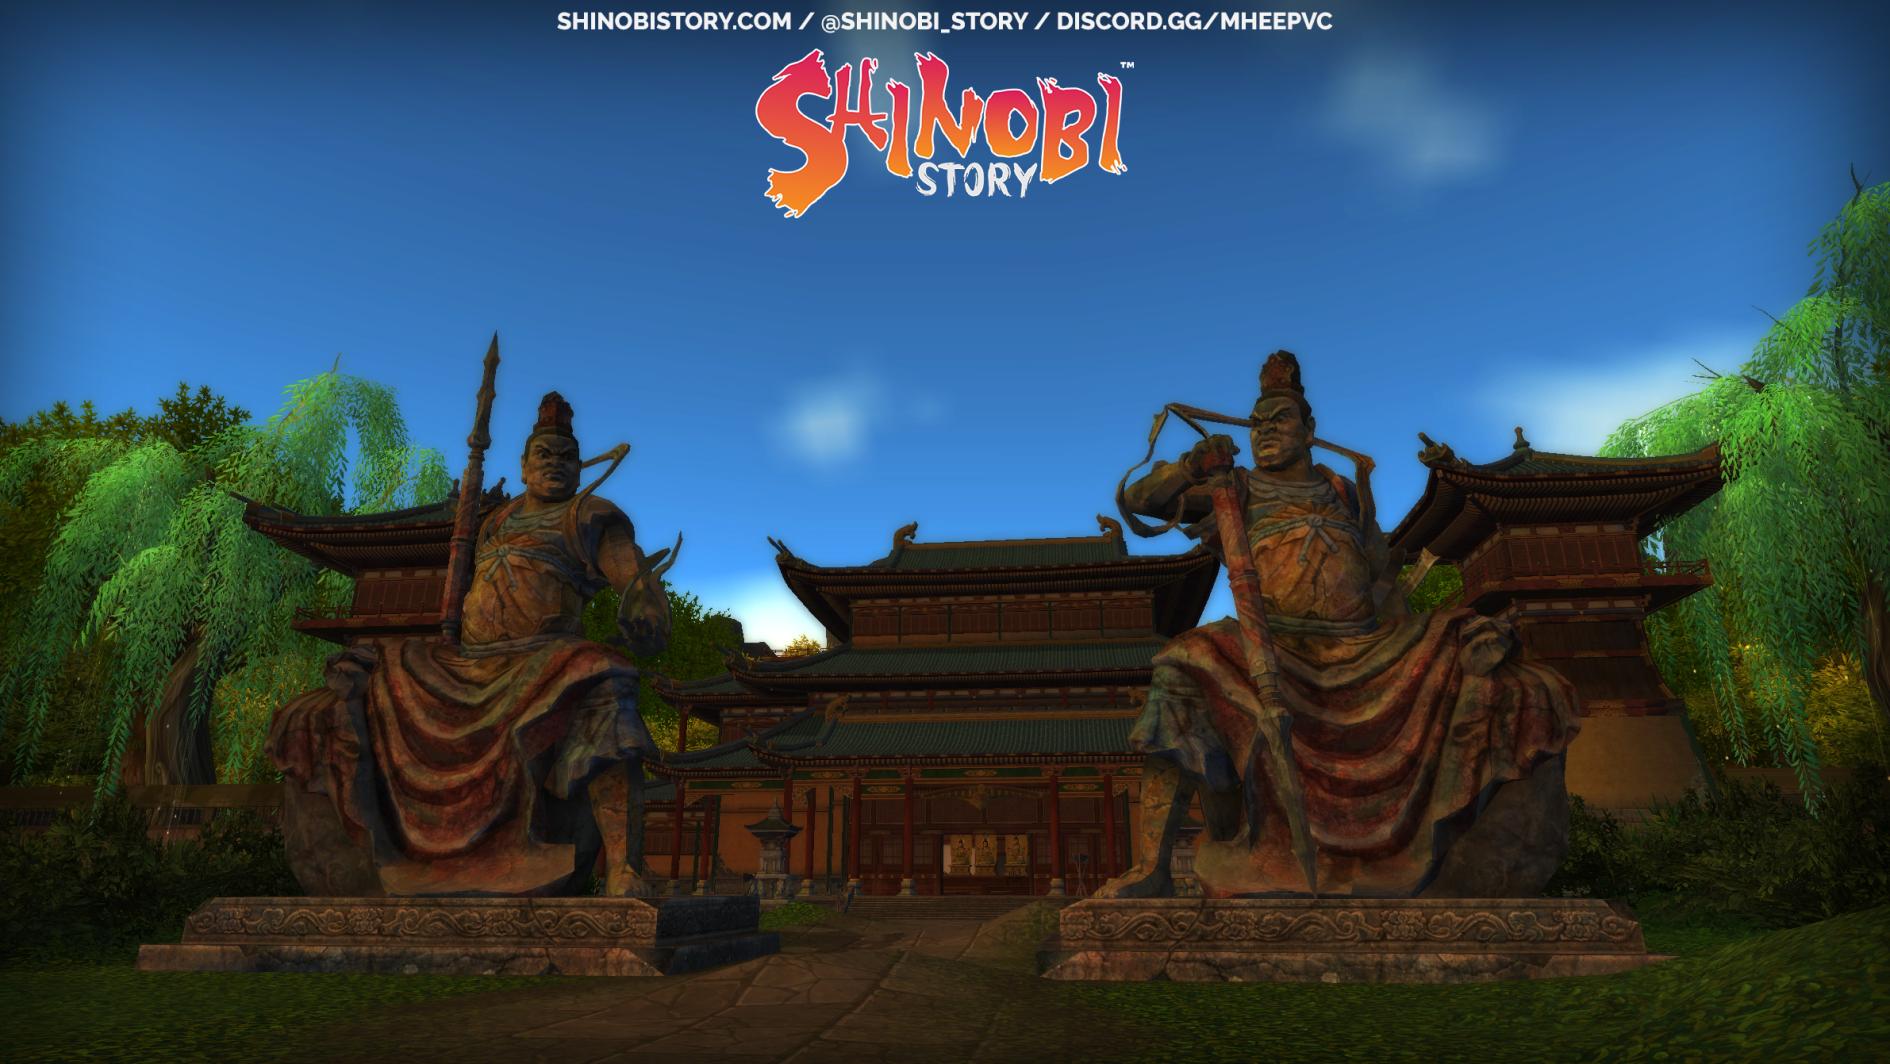 Shinobi Story Fire Temple Ninja Monks Land Of Fire Senju Clan Image Indie Db - roblox shinobi story clans